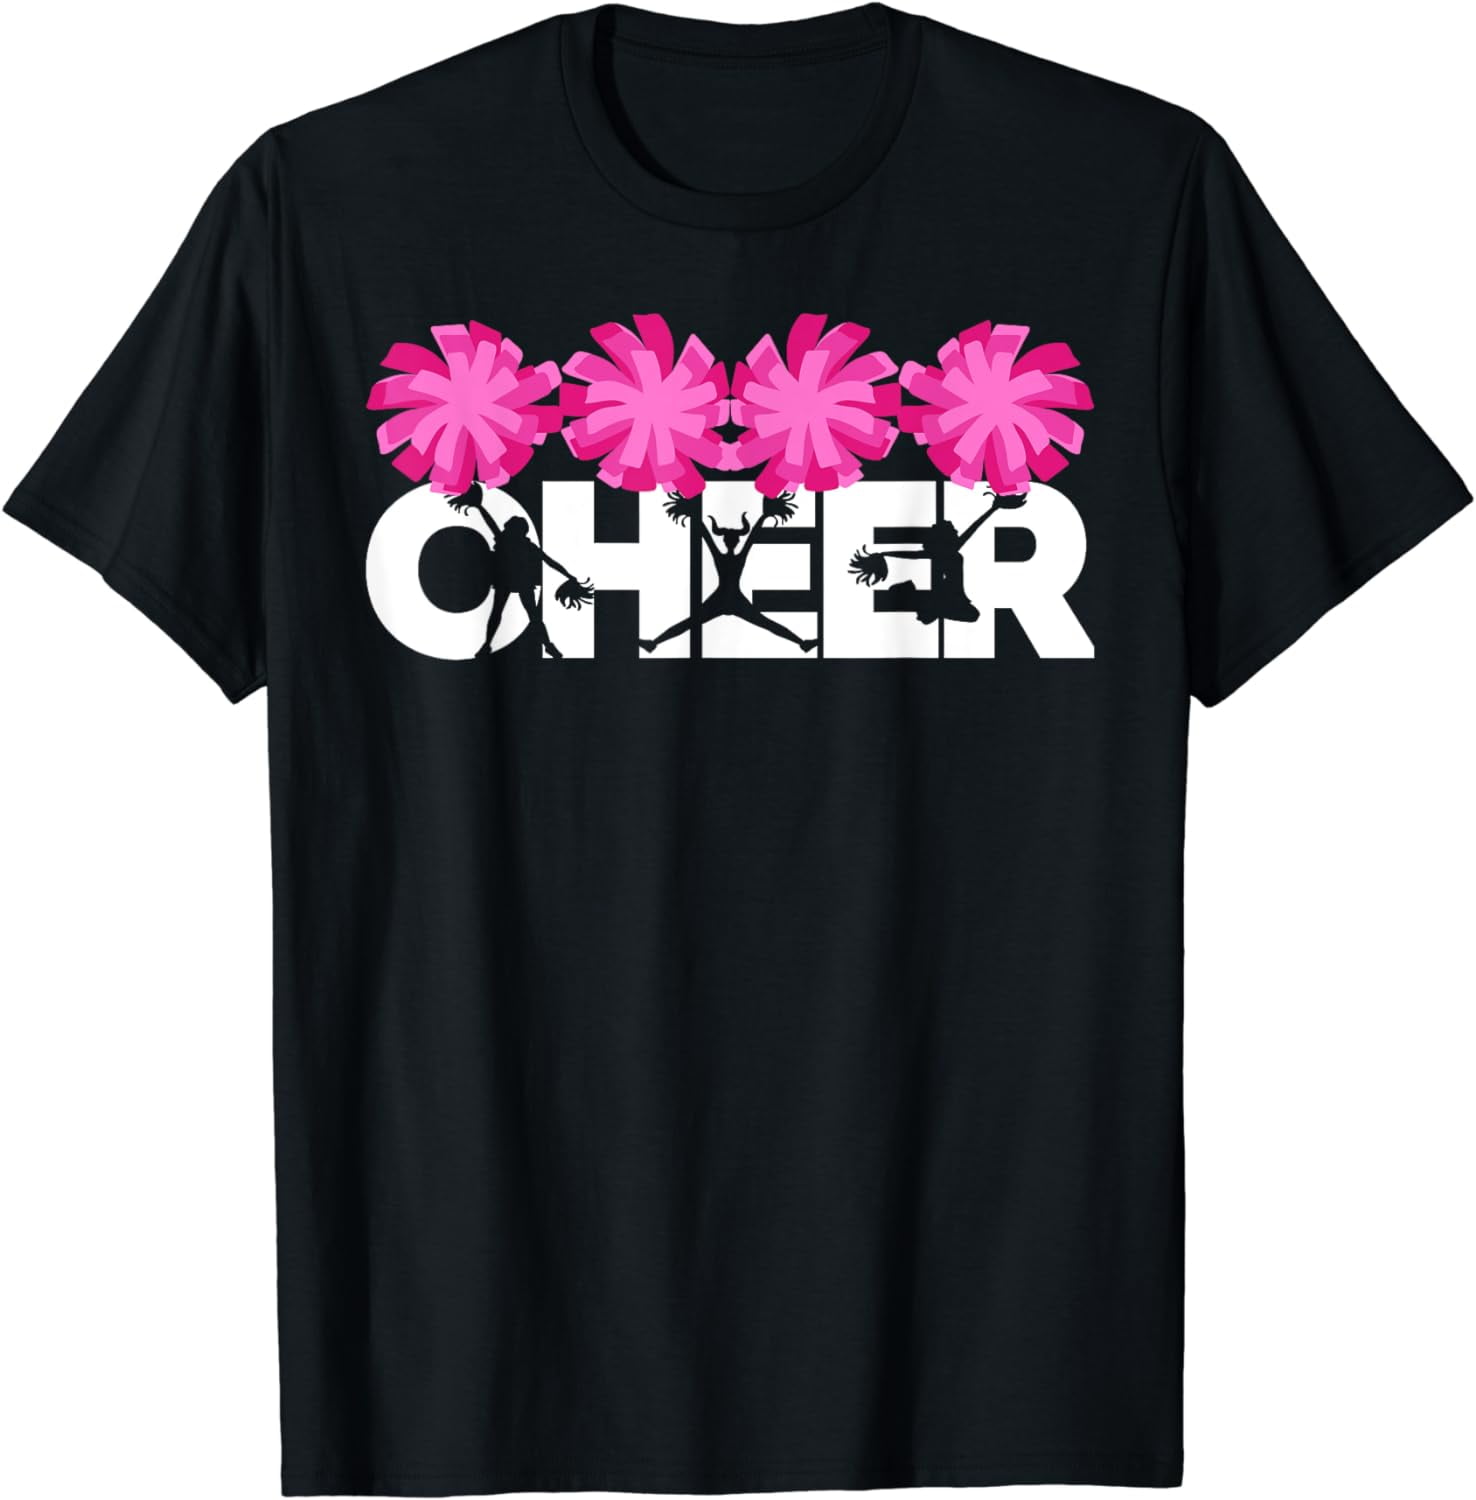 Cheer Cheerleader Cheering Squad Dancer Dancing Tumbling T-Shirt ...